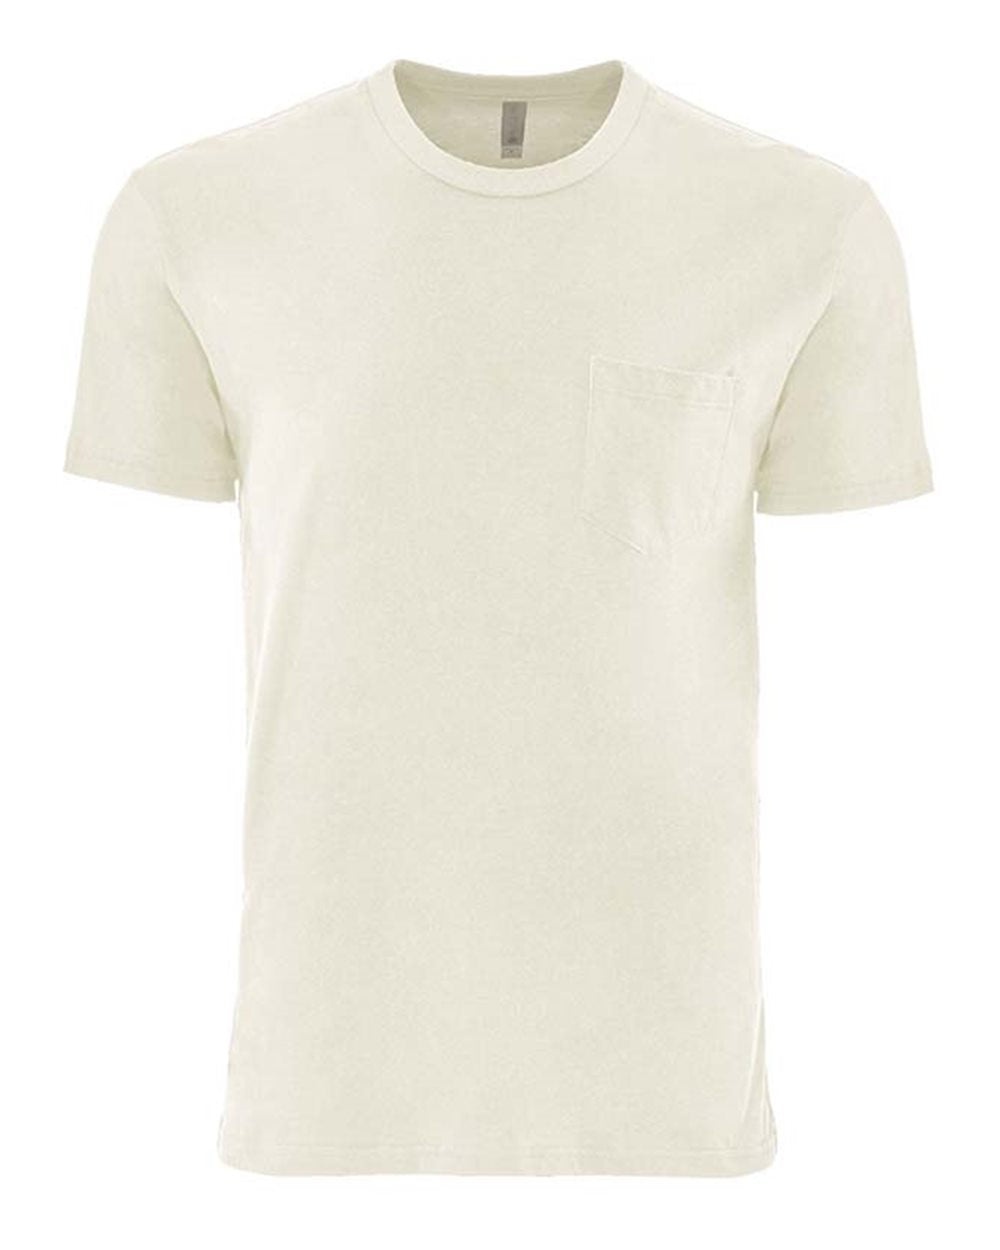 Next Level Cotton Pocket T-Shirt